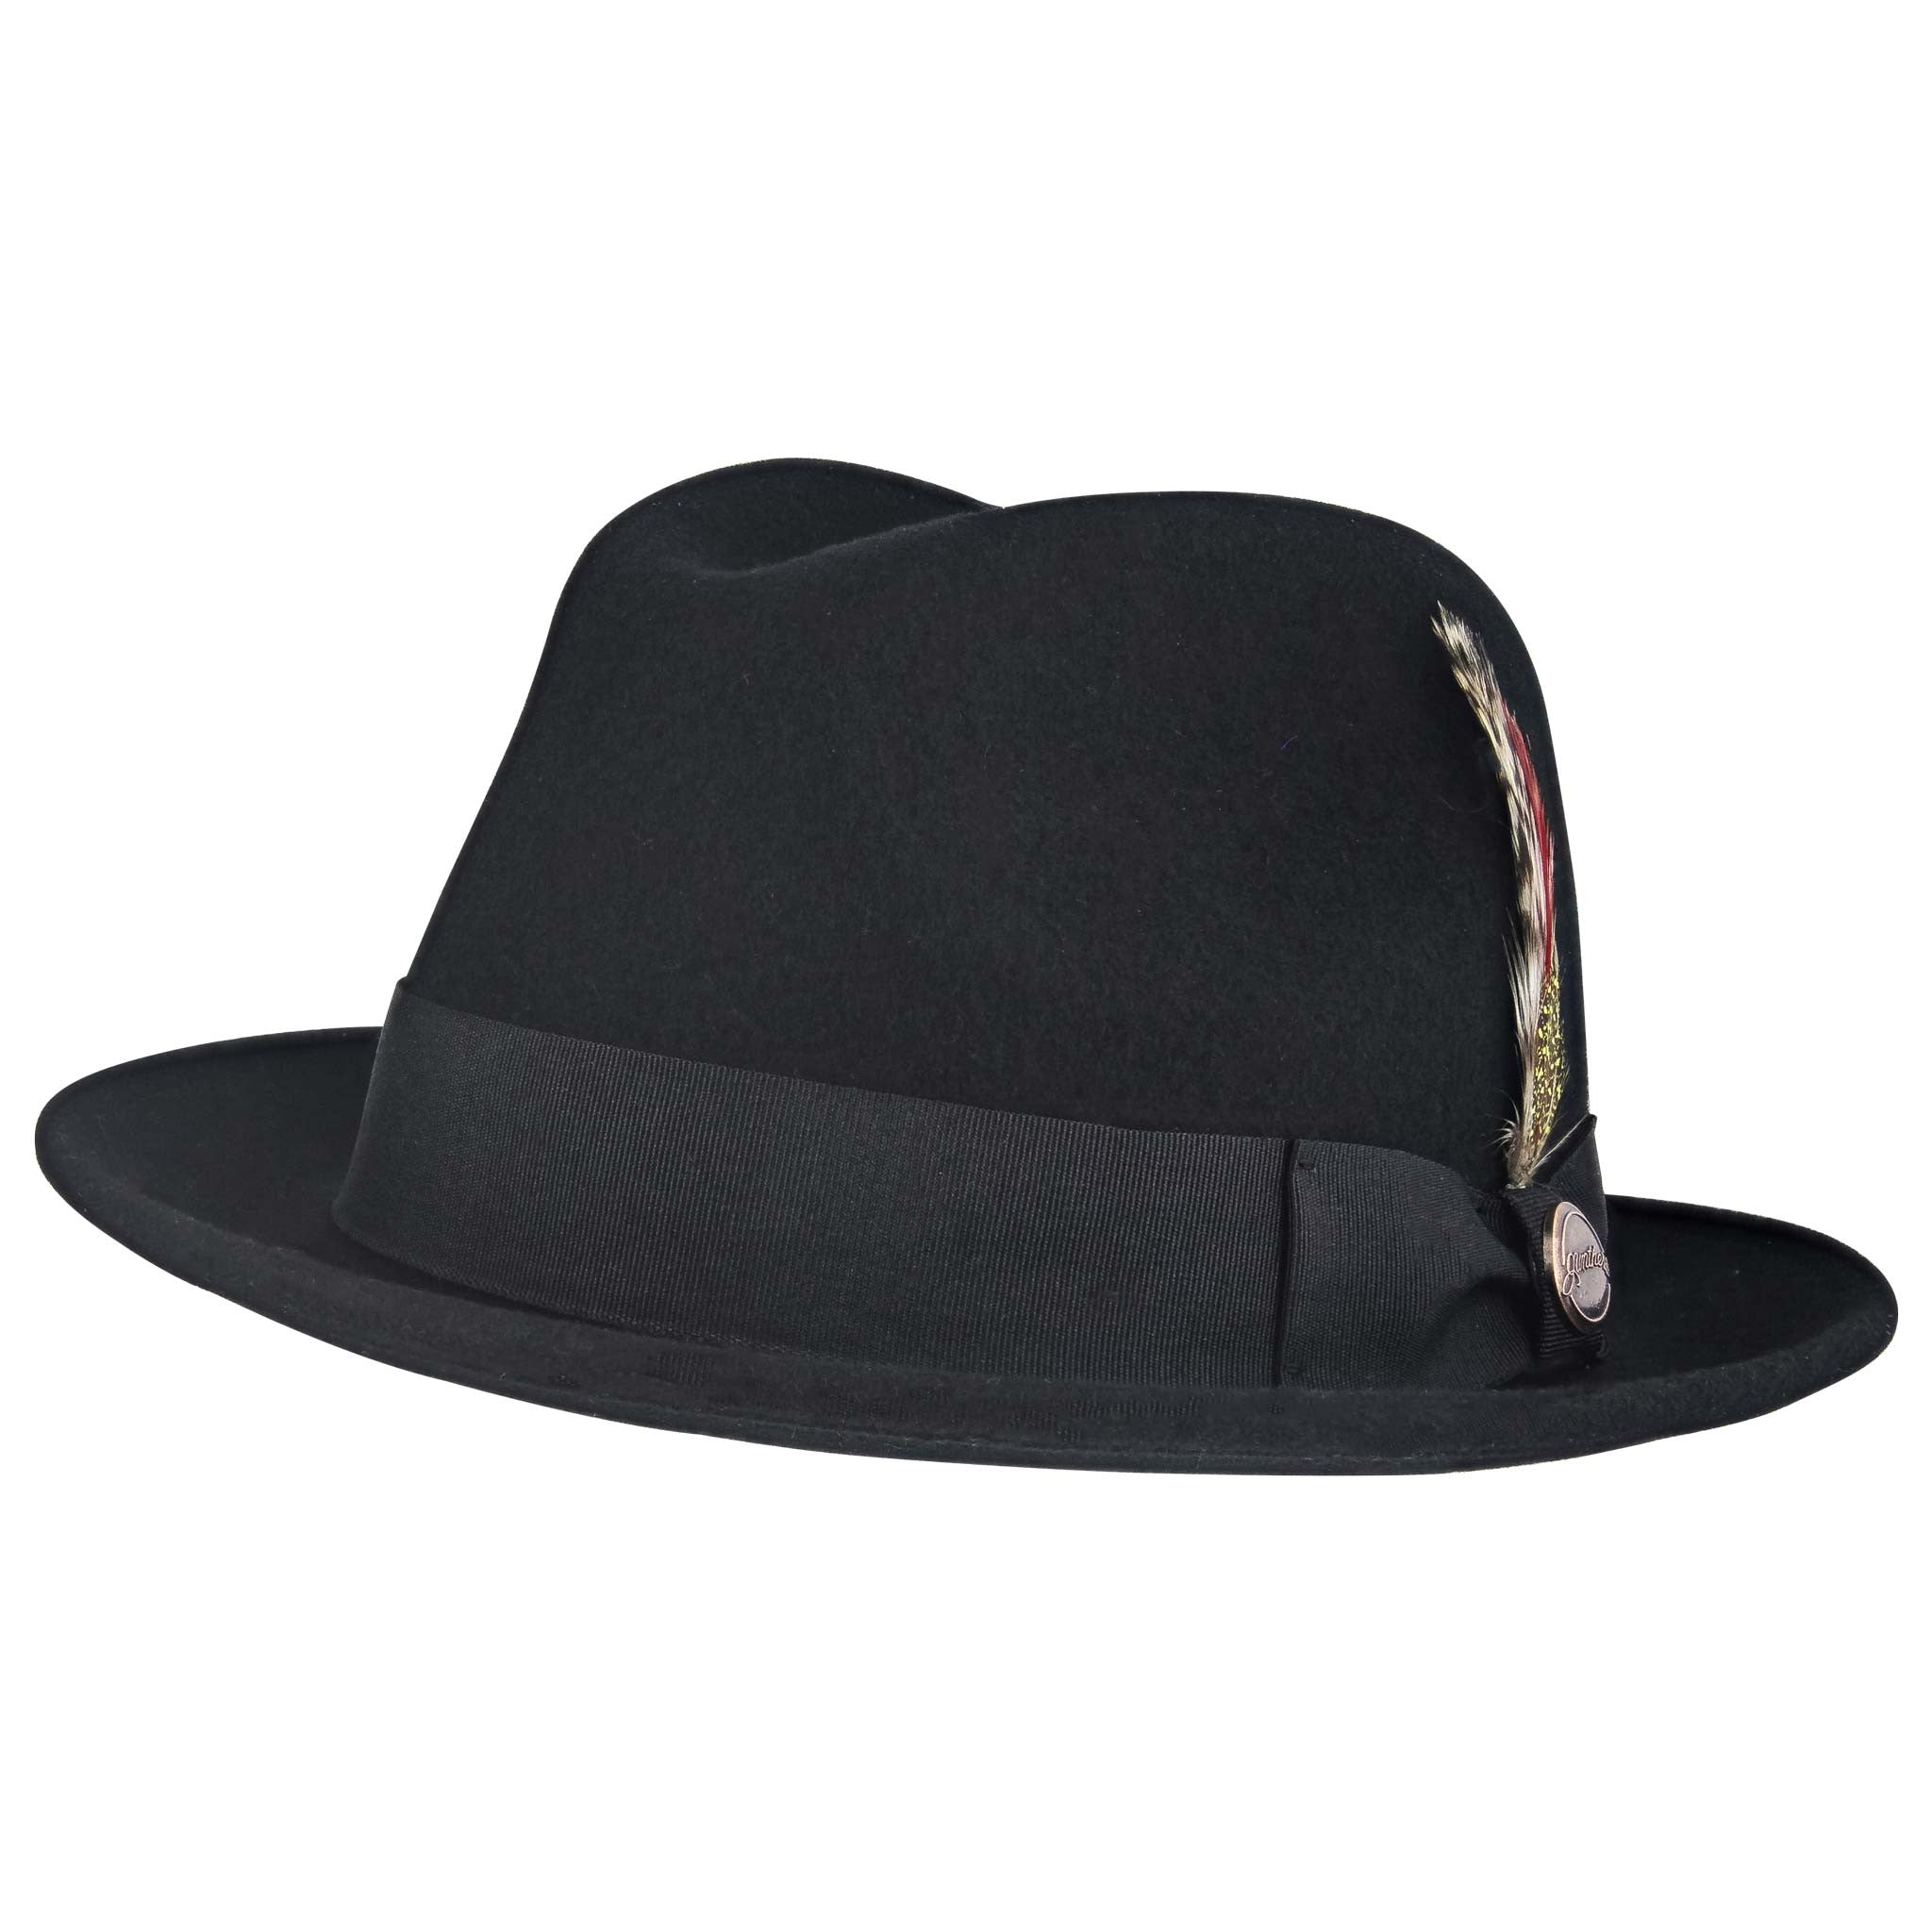 La Cuatro Fedora Black Front View of the Hat